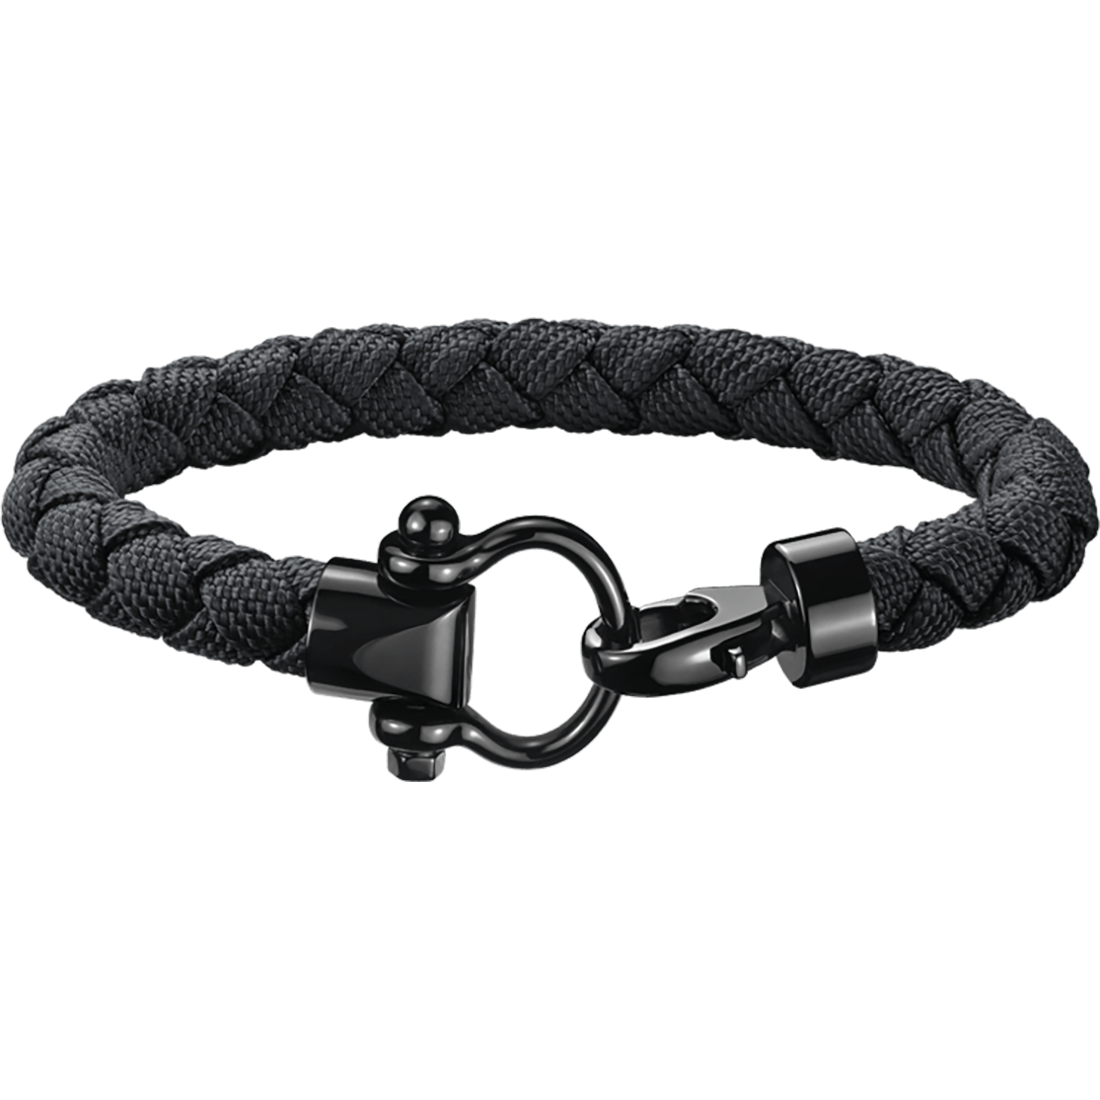 Omega Aqua Sailing Bracelet, Black braided nylon, Stainless steel - BA05CW0000203